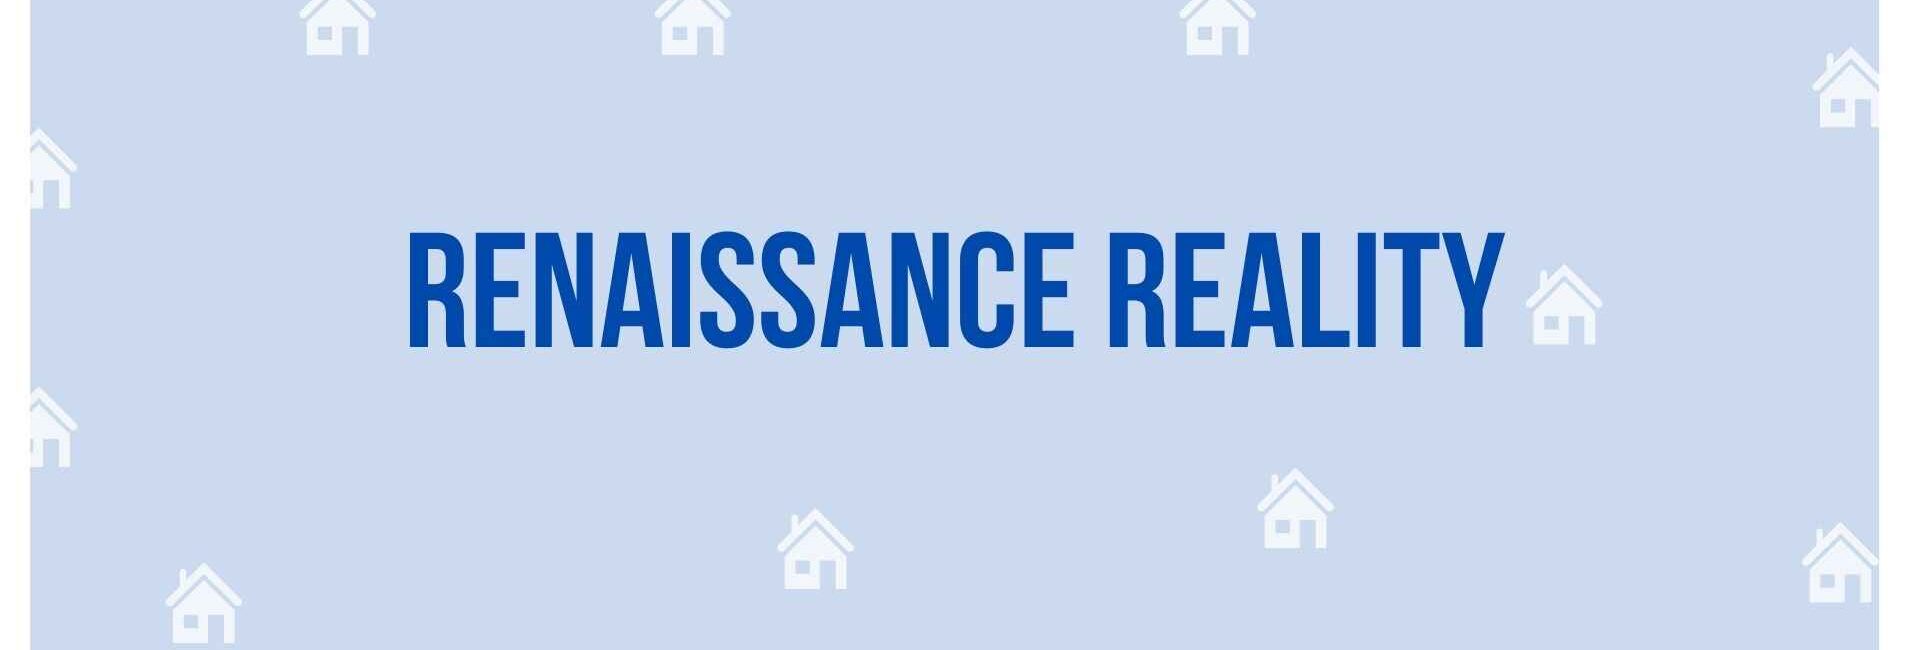 Renaissance Reality - Property Dealer in Noida